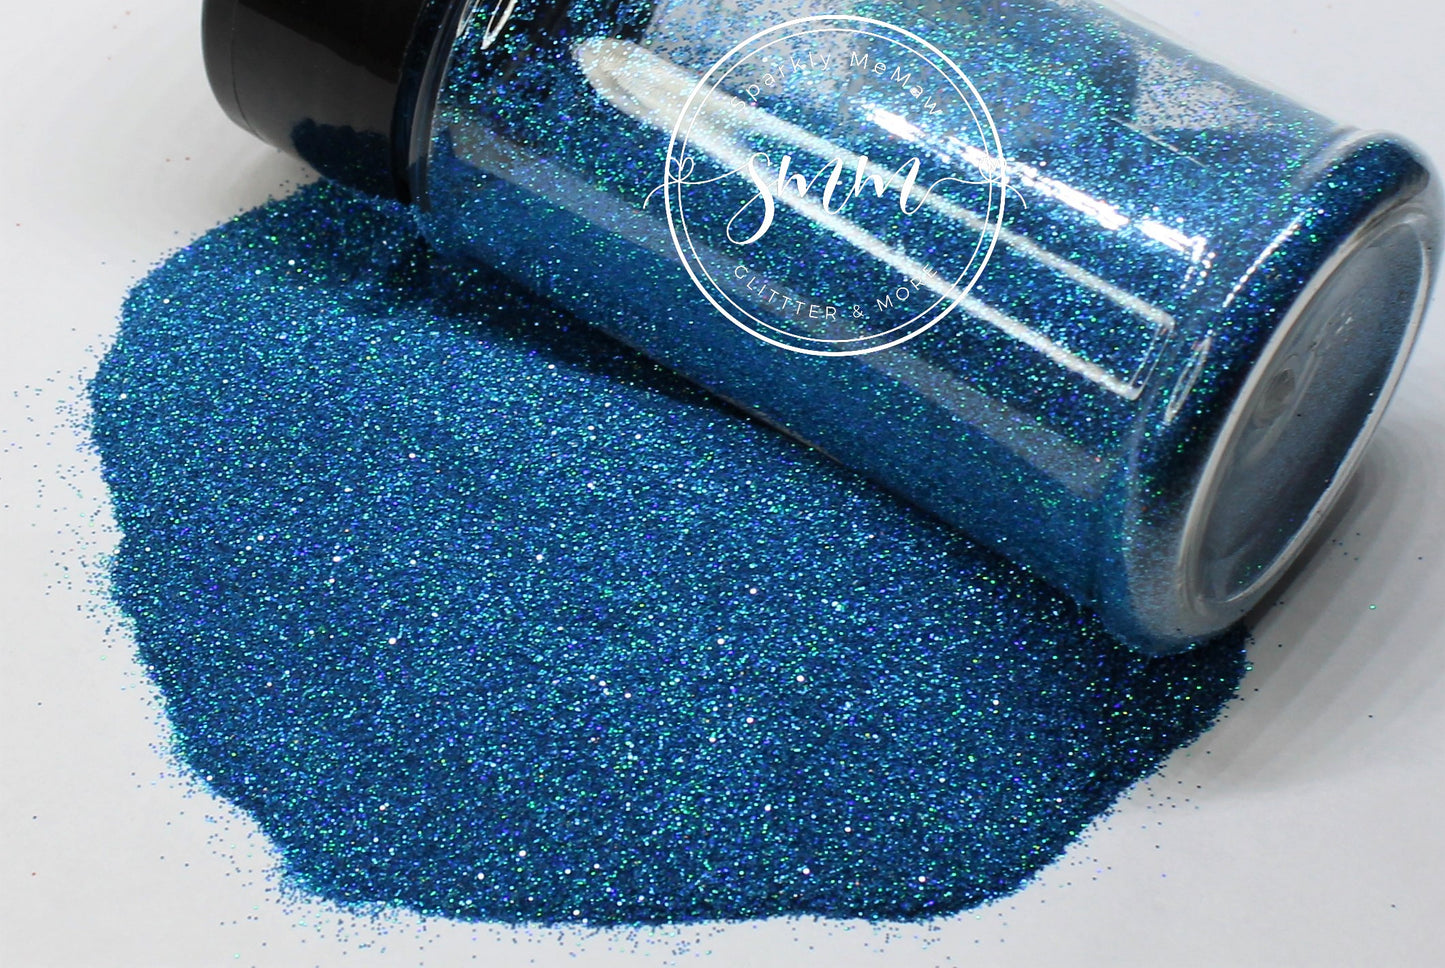 Dill with it Fine Iridescent Glitter Mix – Sparkly MeMaw LLC